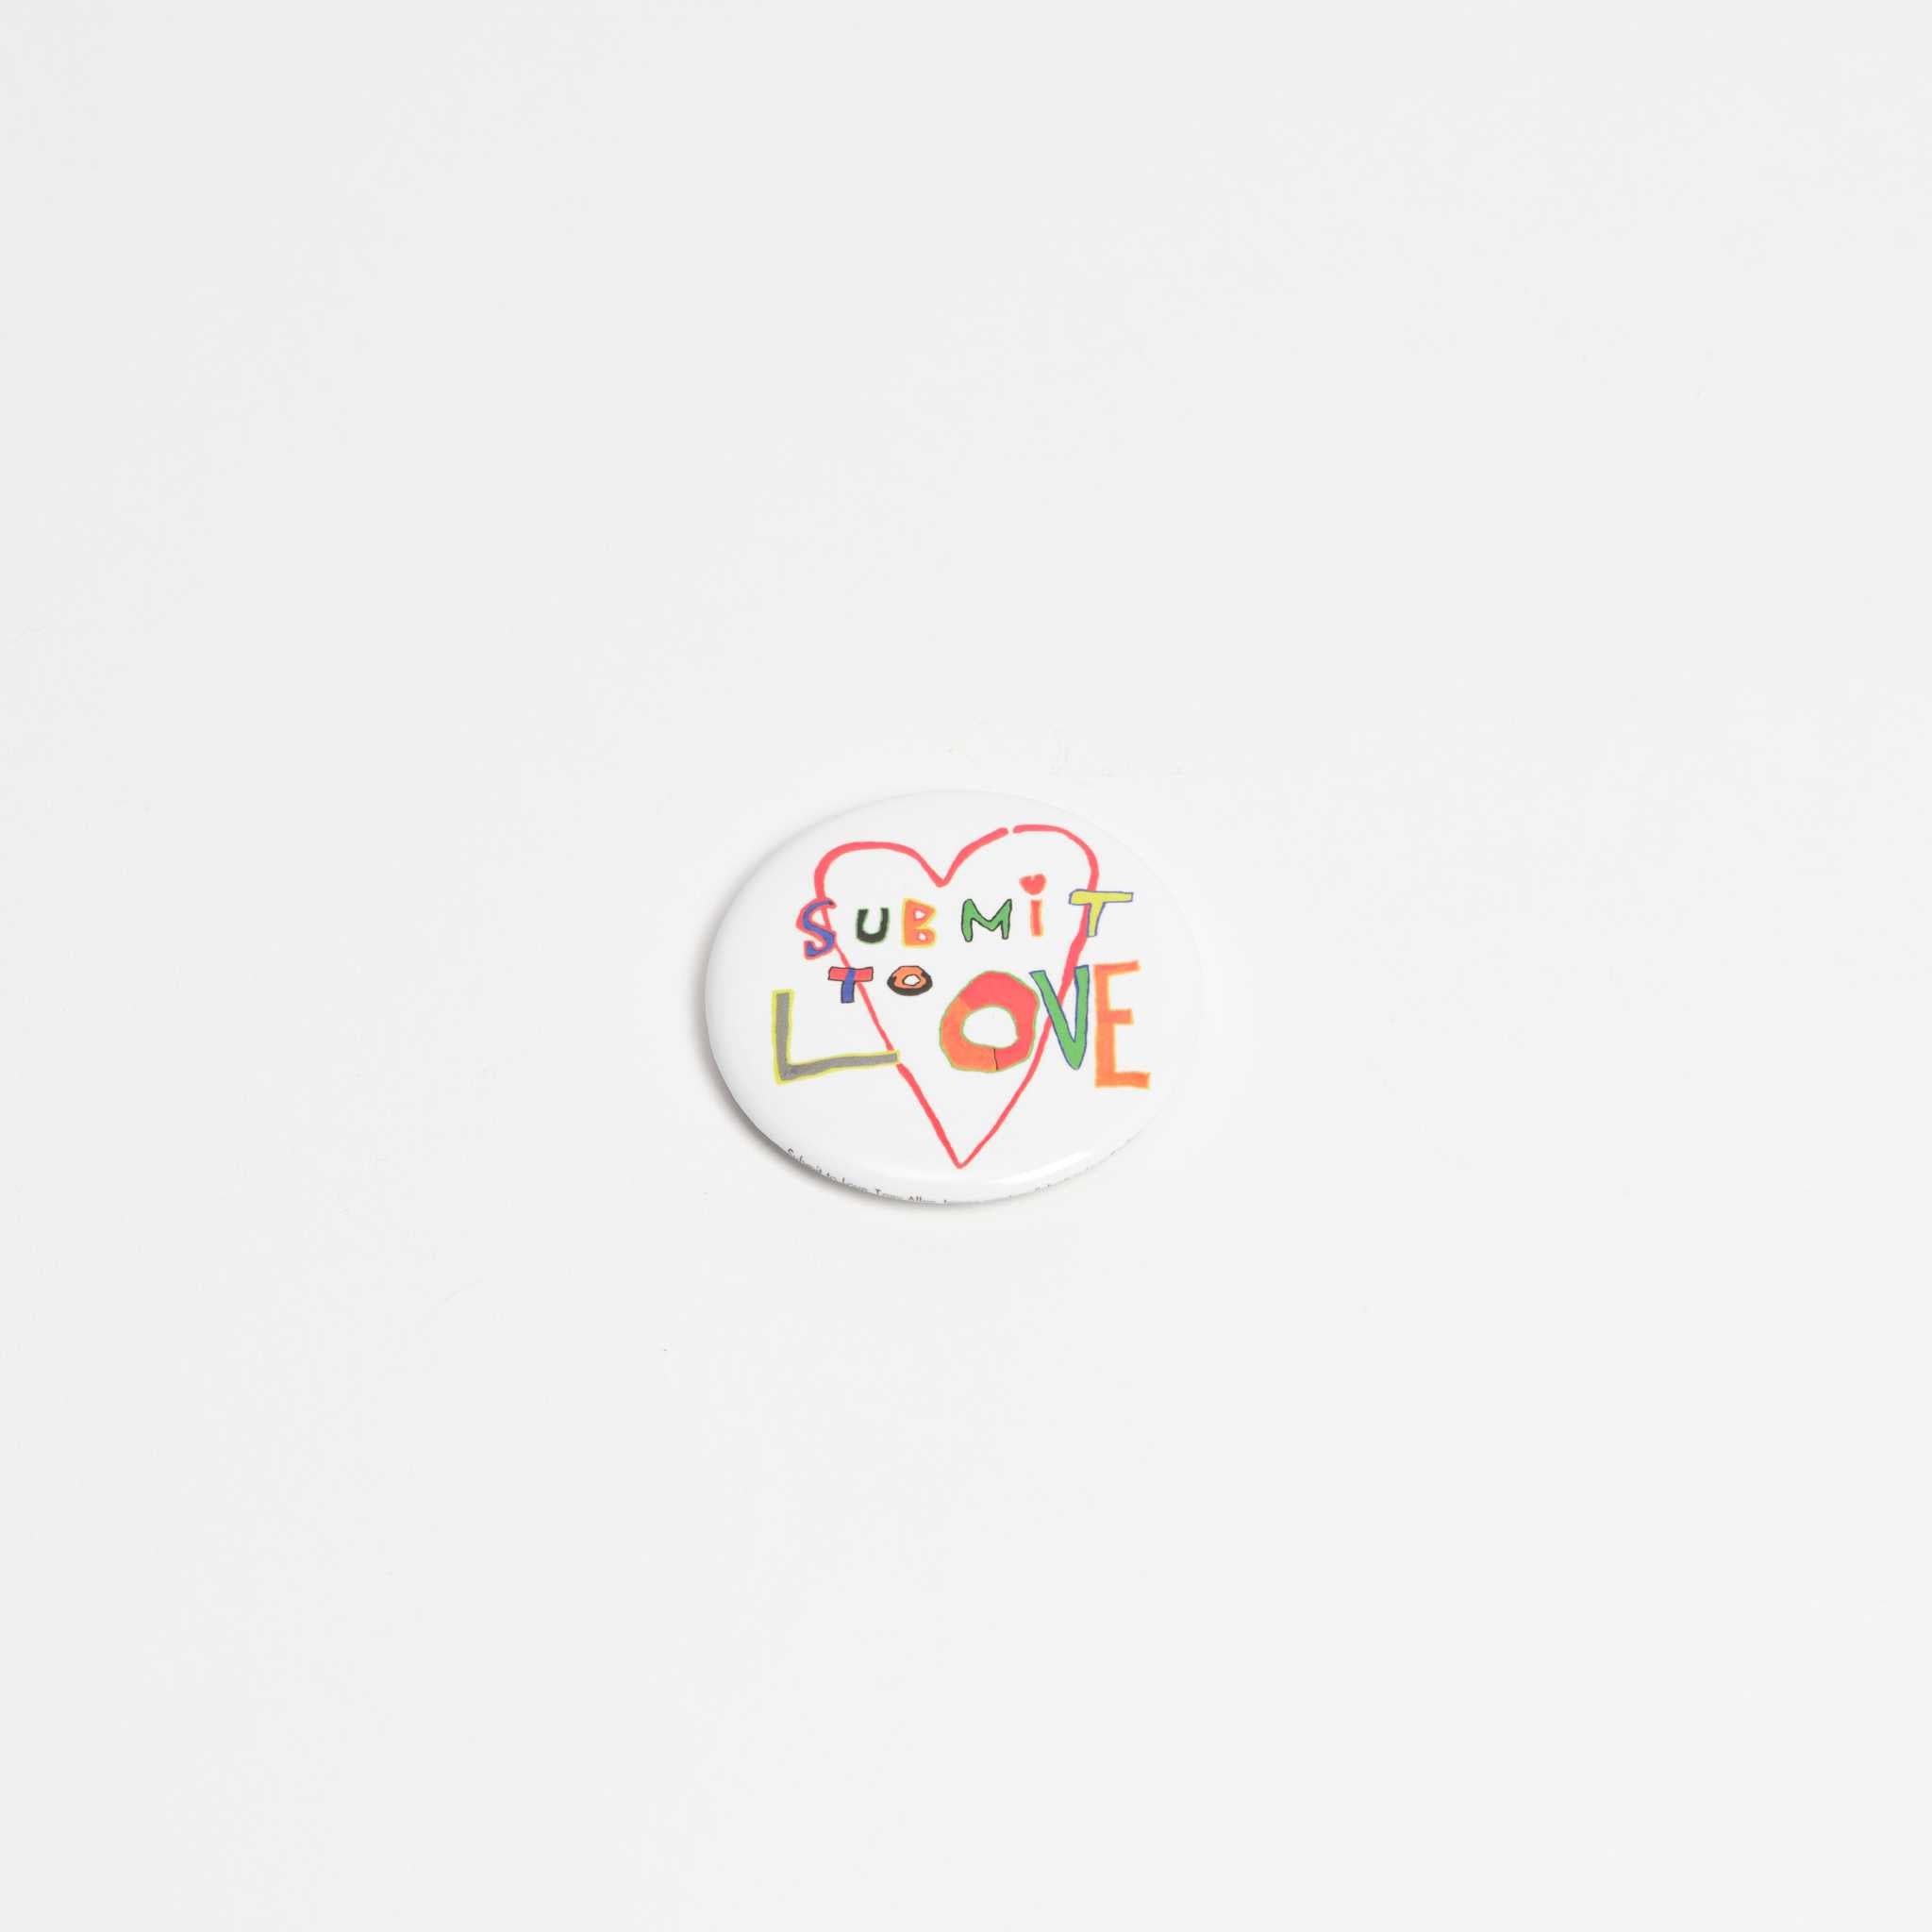 Submit to Love Studios Logo Round Magnet